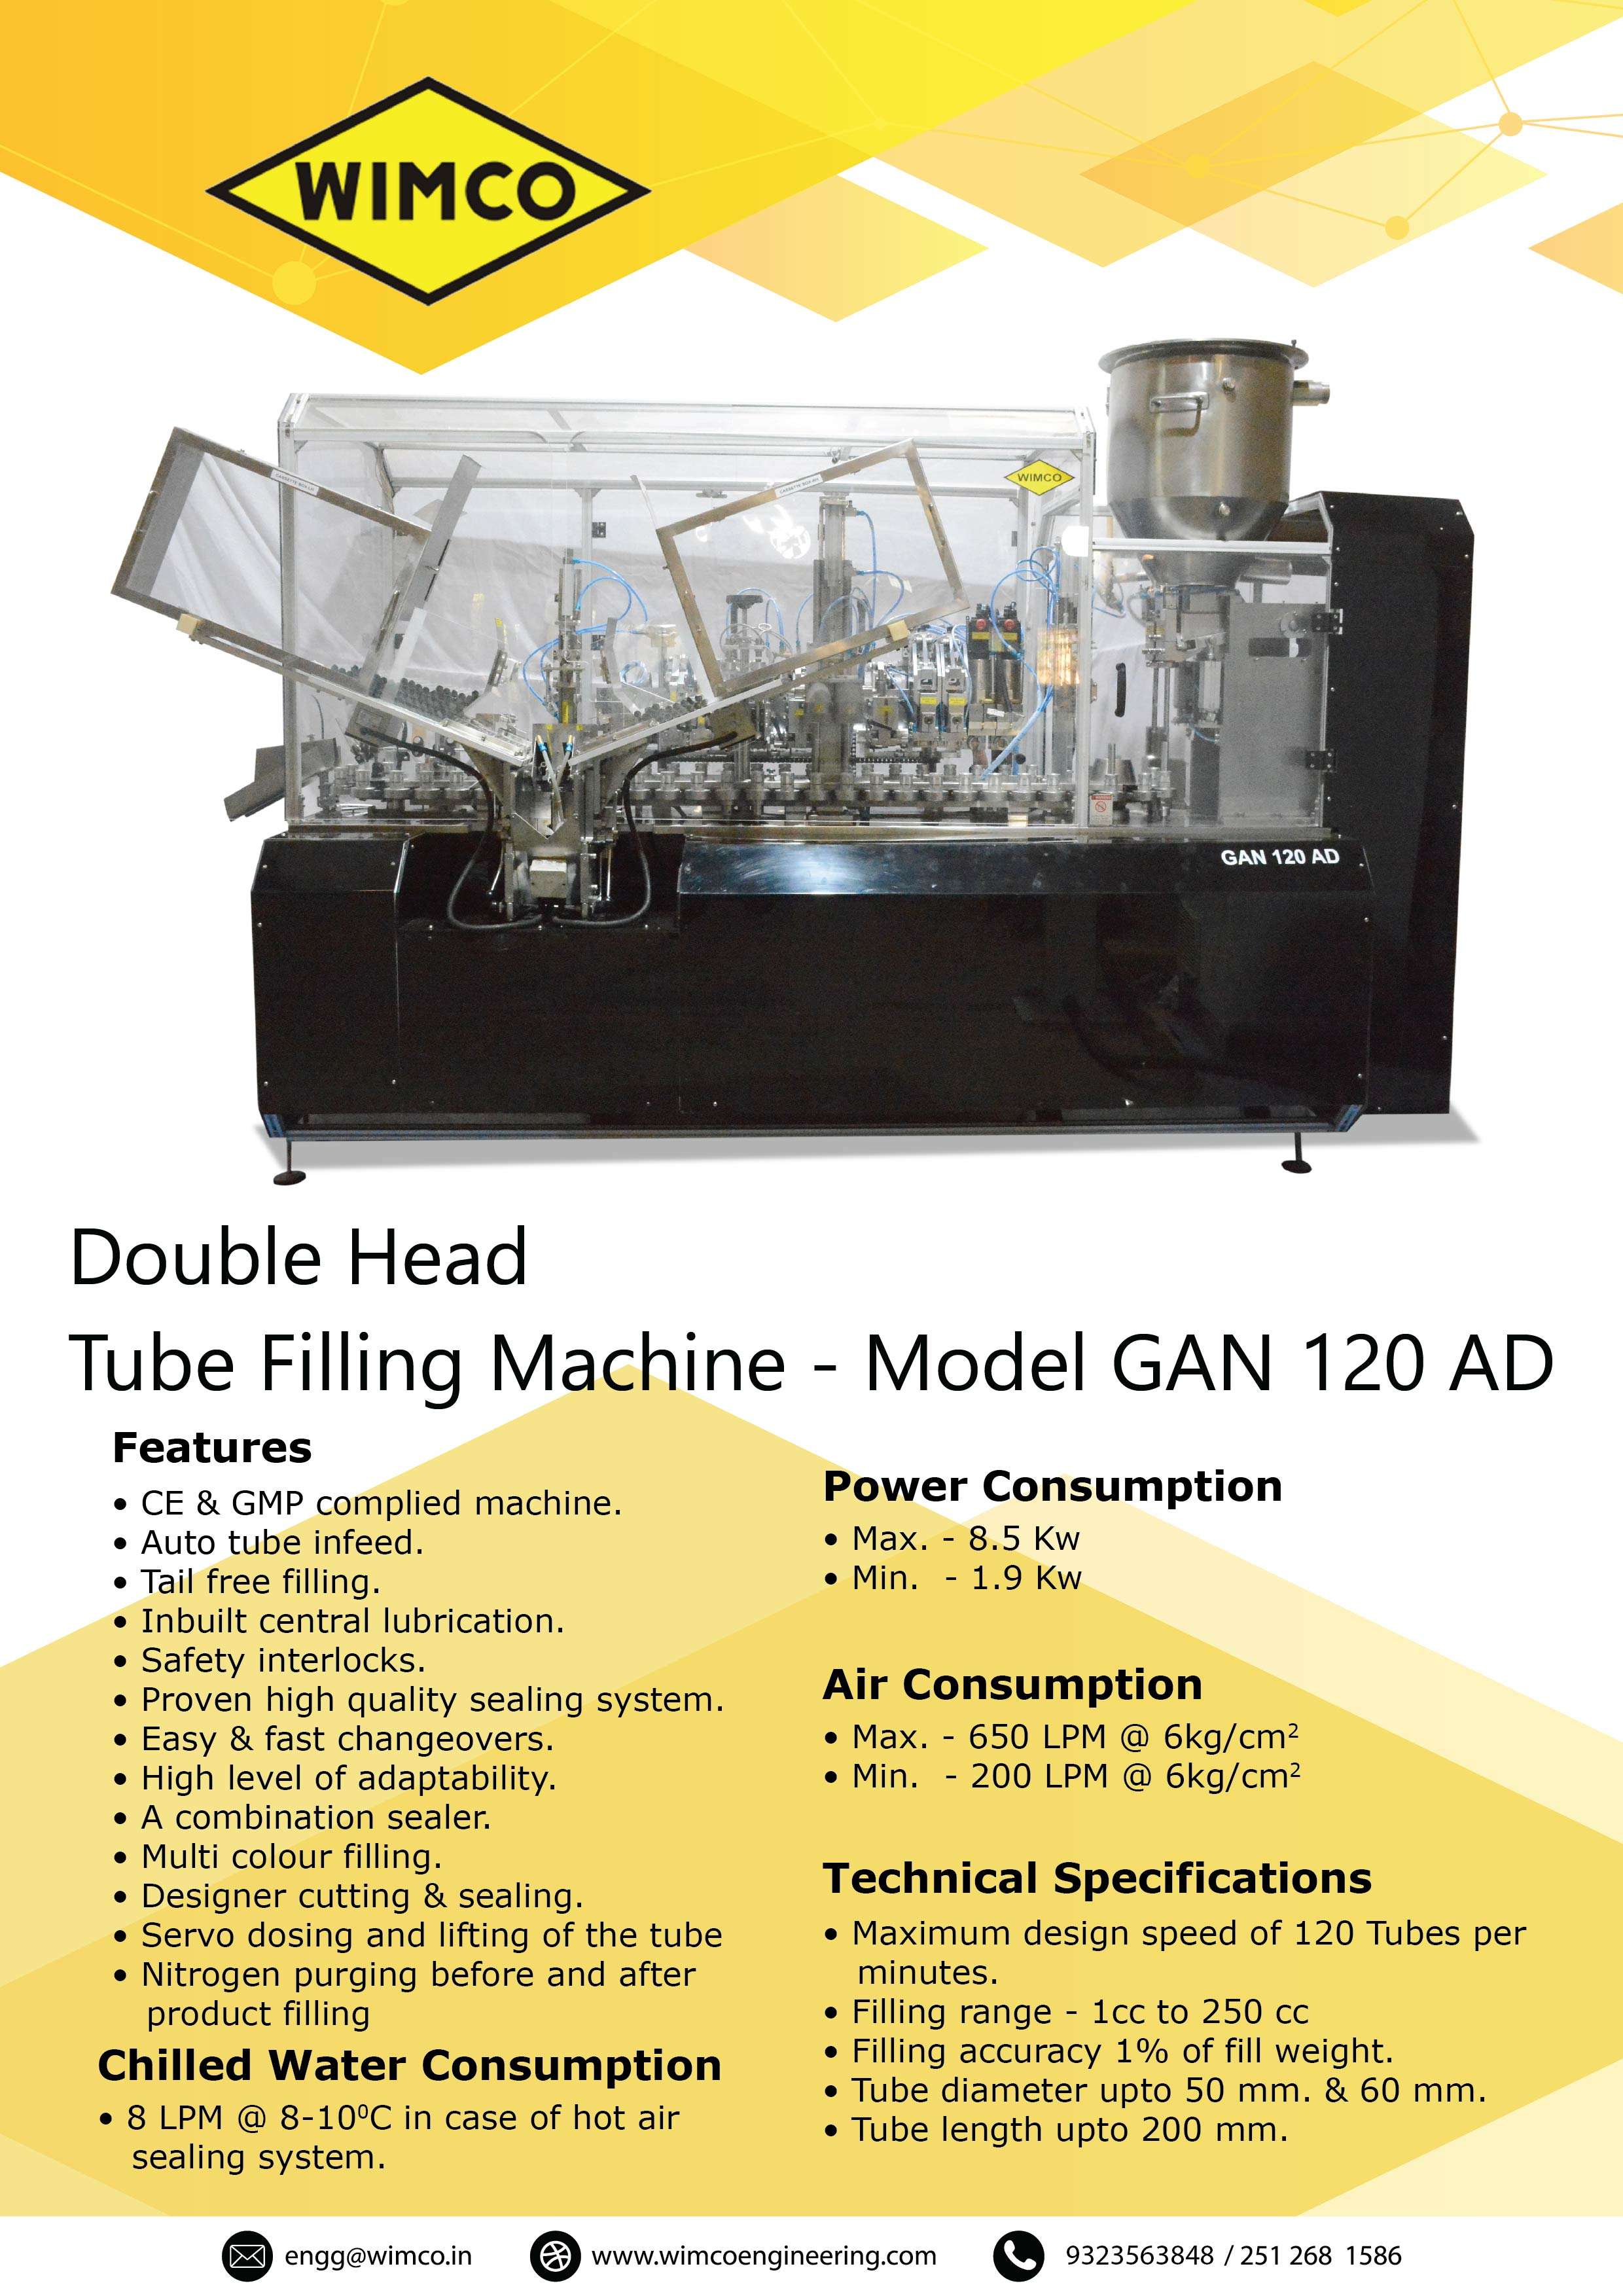 Double Head Tube Filling Machine - GAN 120 AD